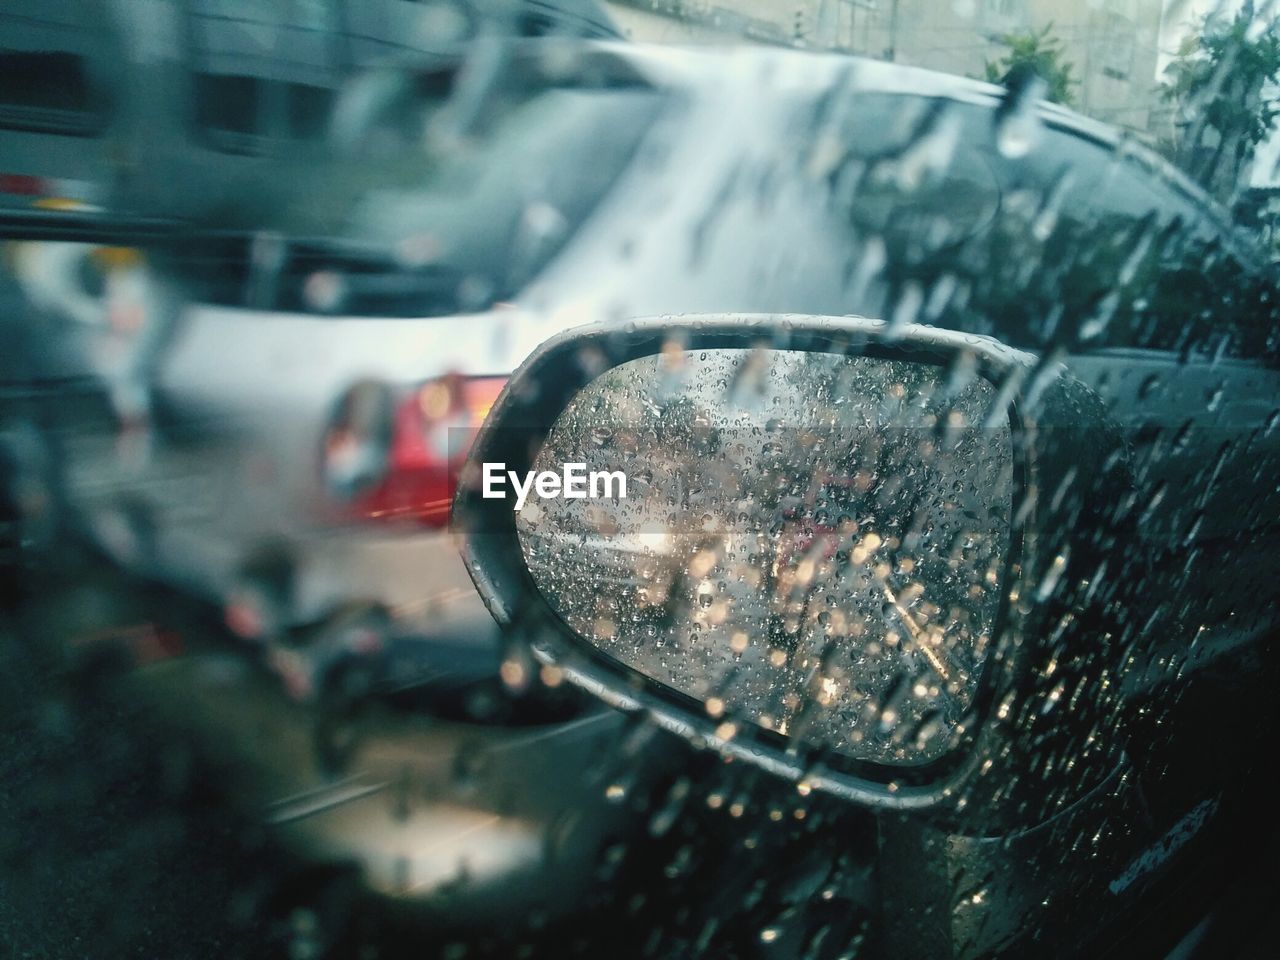 Close-up of wet car during rainy season